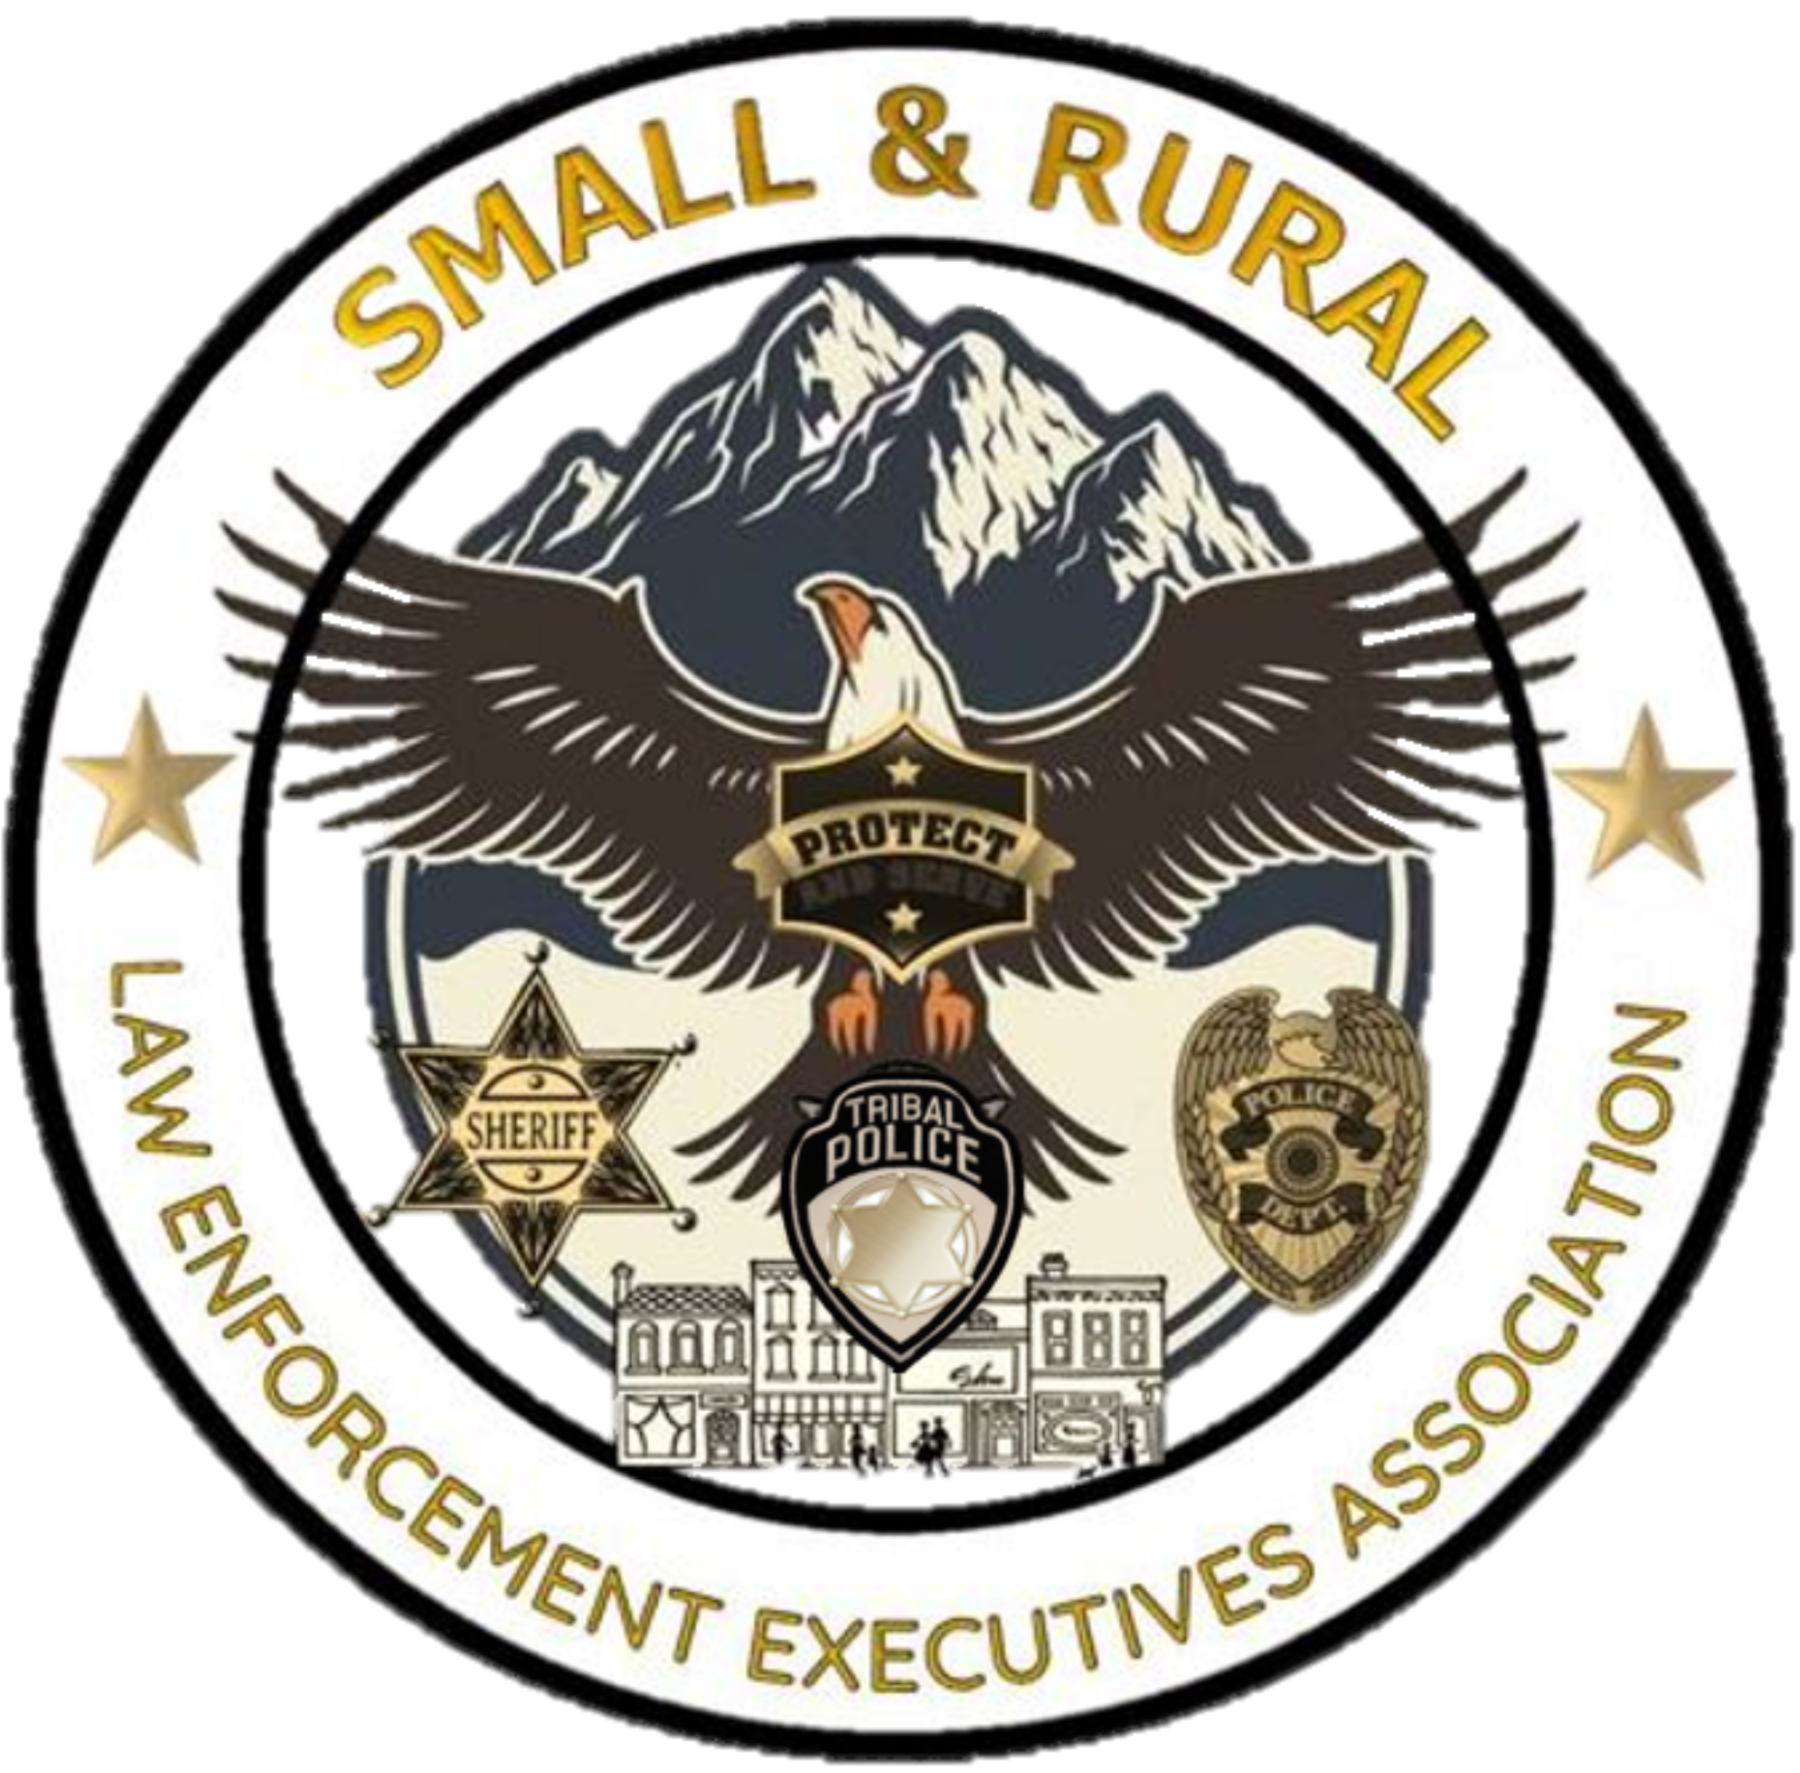 Small & Rural Law Enforcement Executives Association - Professional Associations - JobStars USA